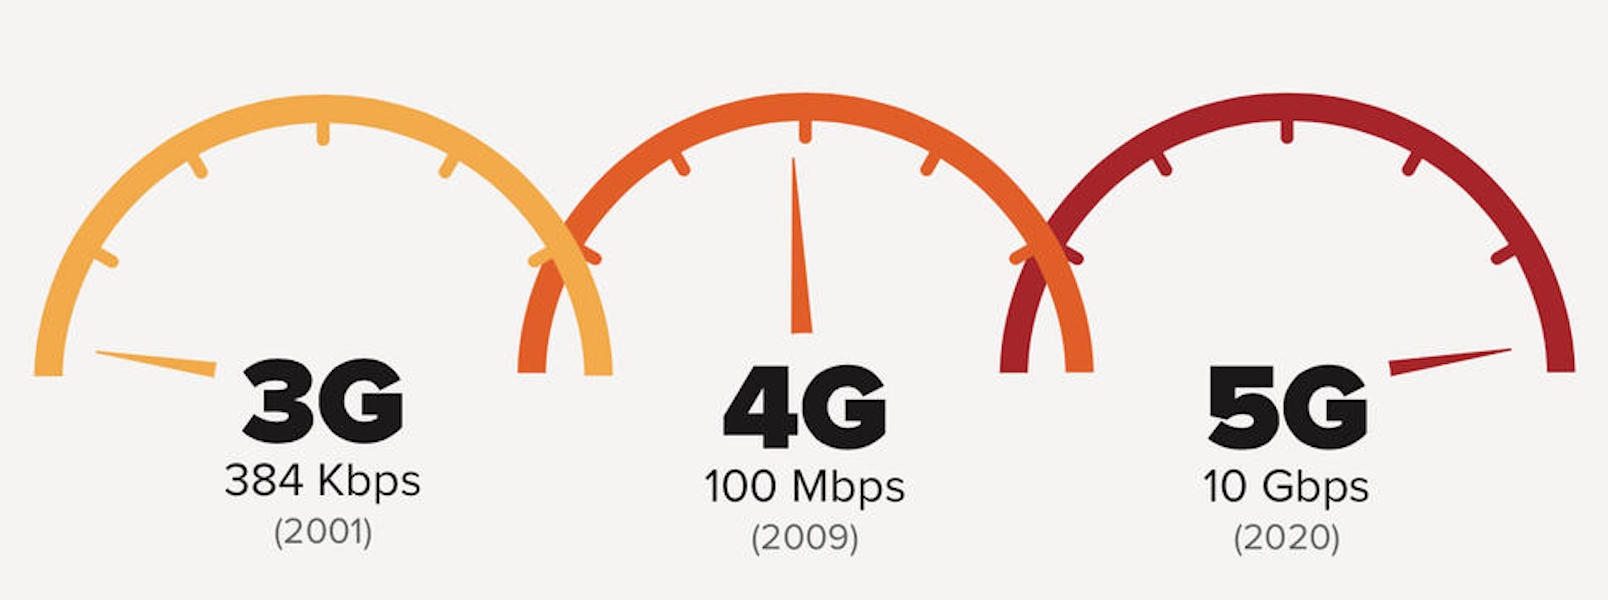 Тест 5 g. 5g vs 4g. 2g vs 5g. 5g скорость интернета. Скорость интернета 3g и 4g.